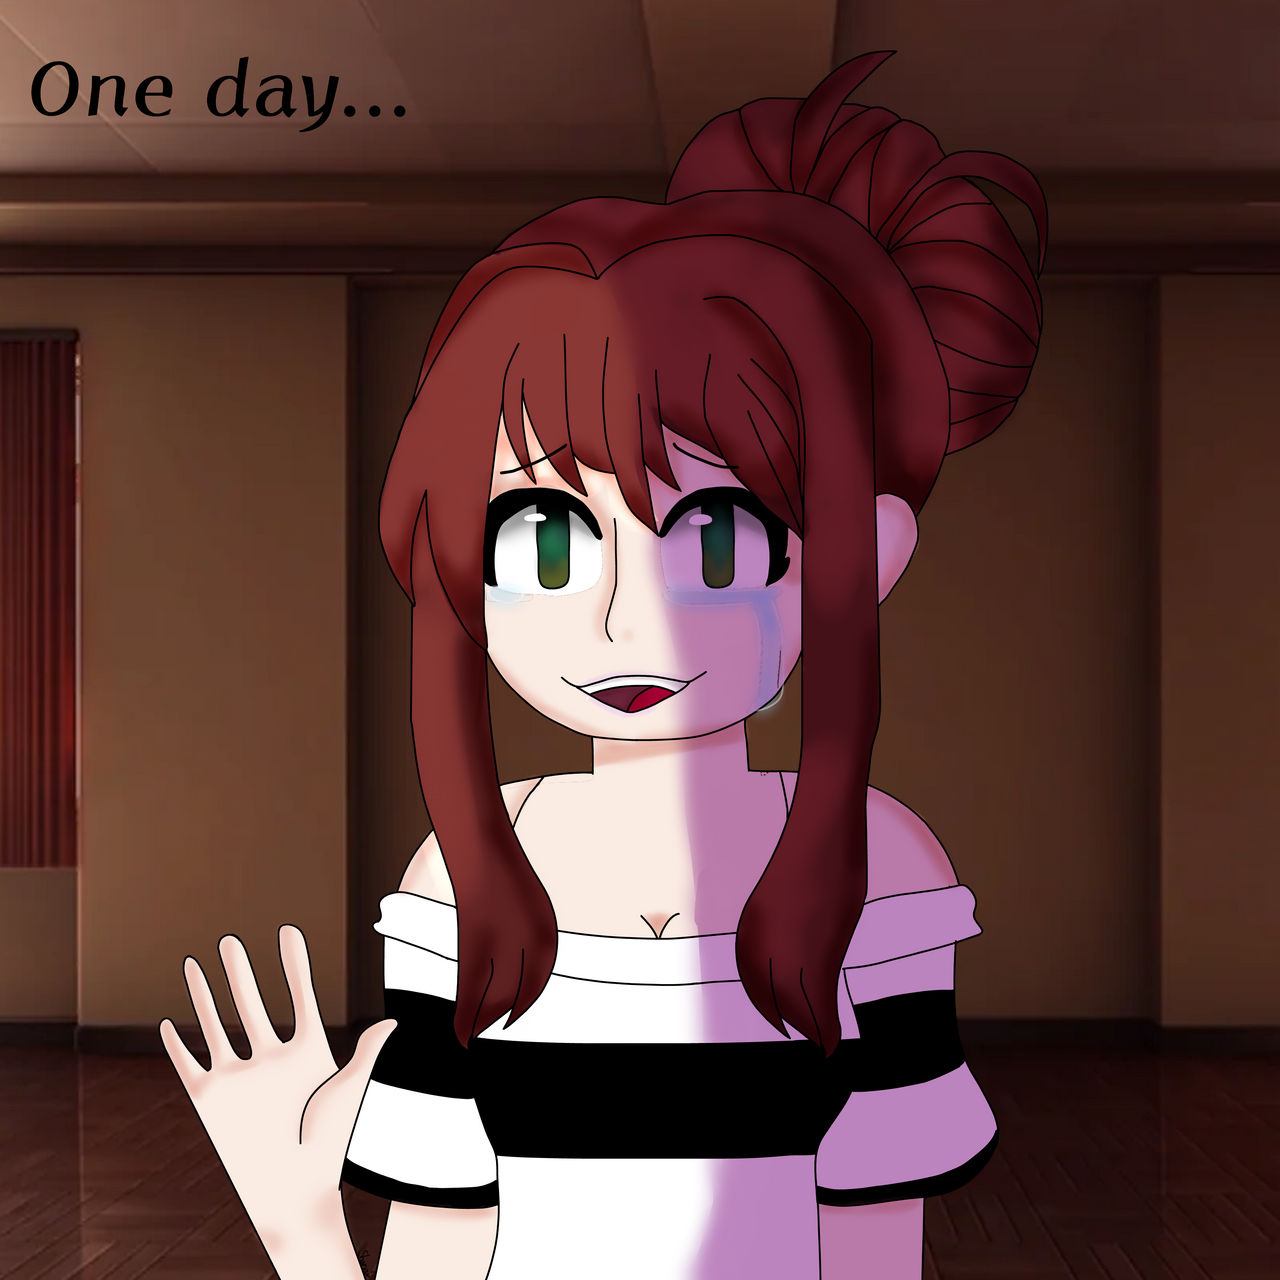 Should I get the Monika after story mod?